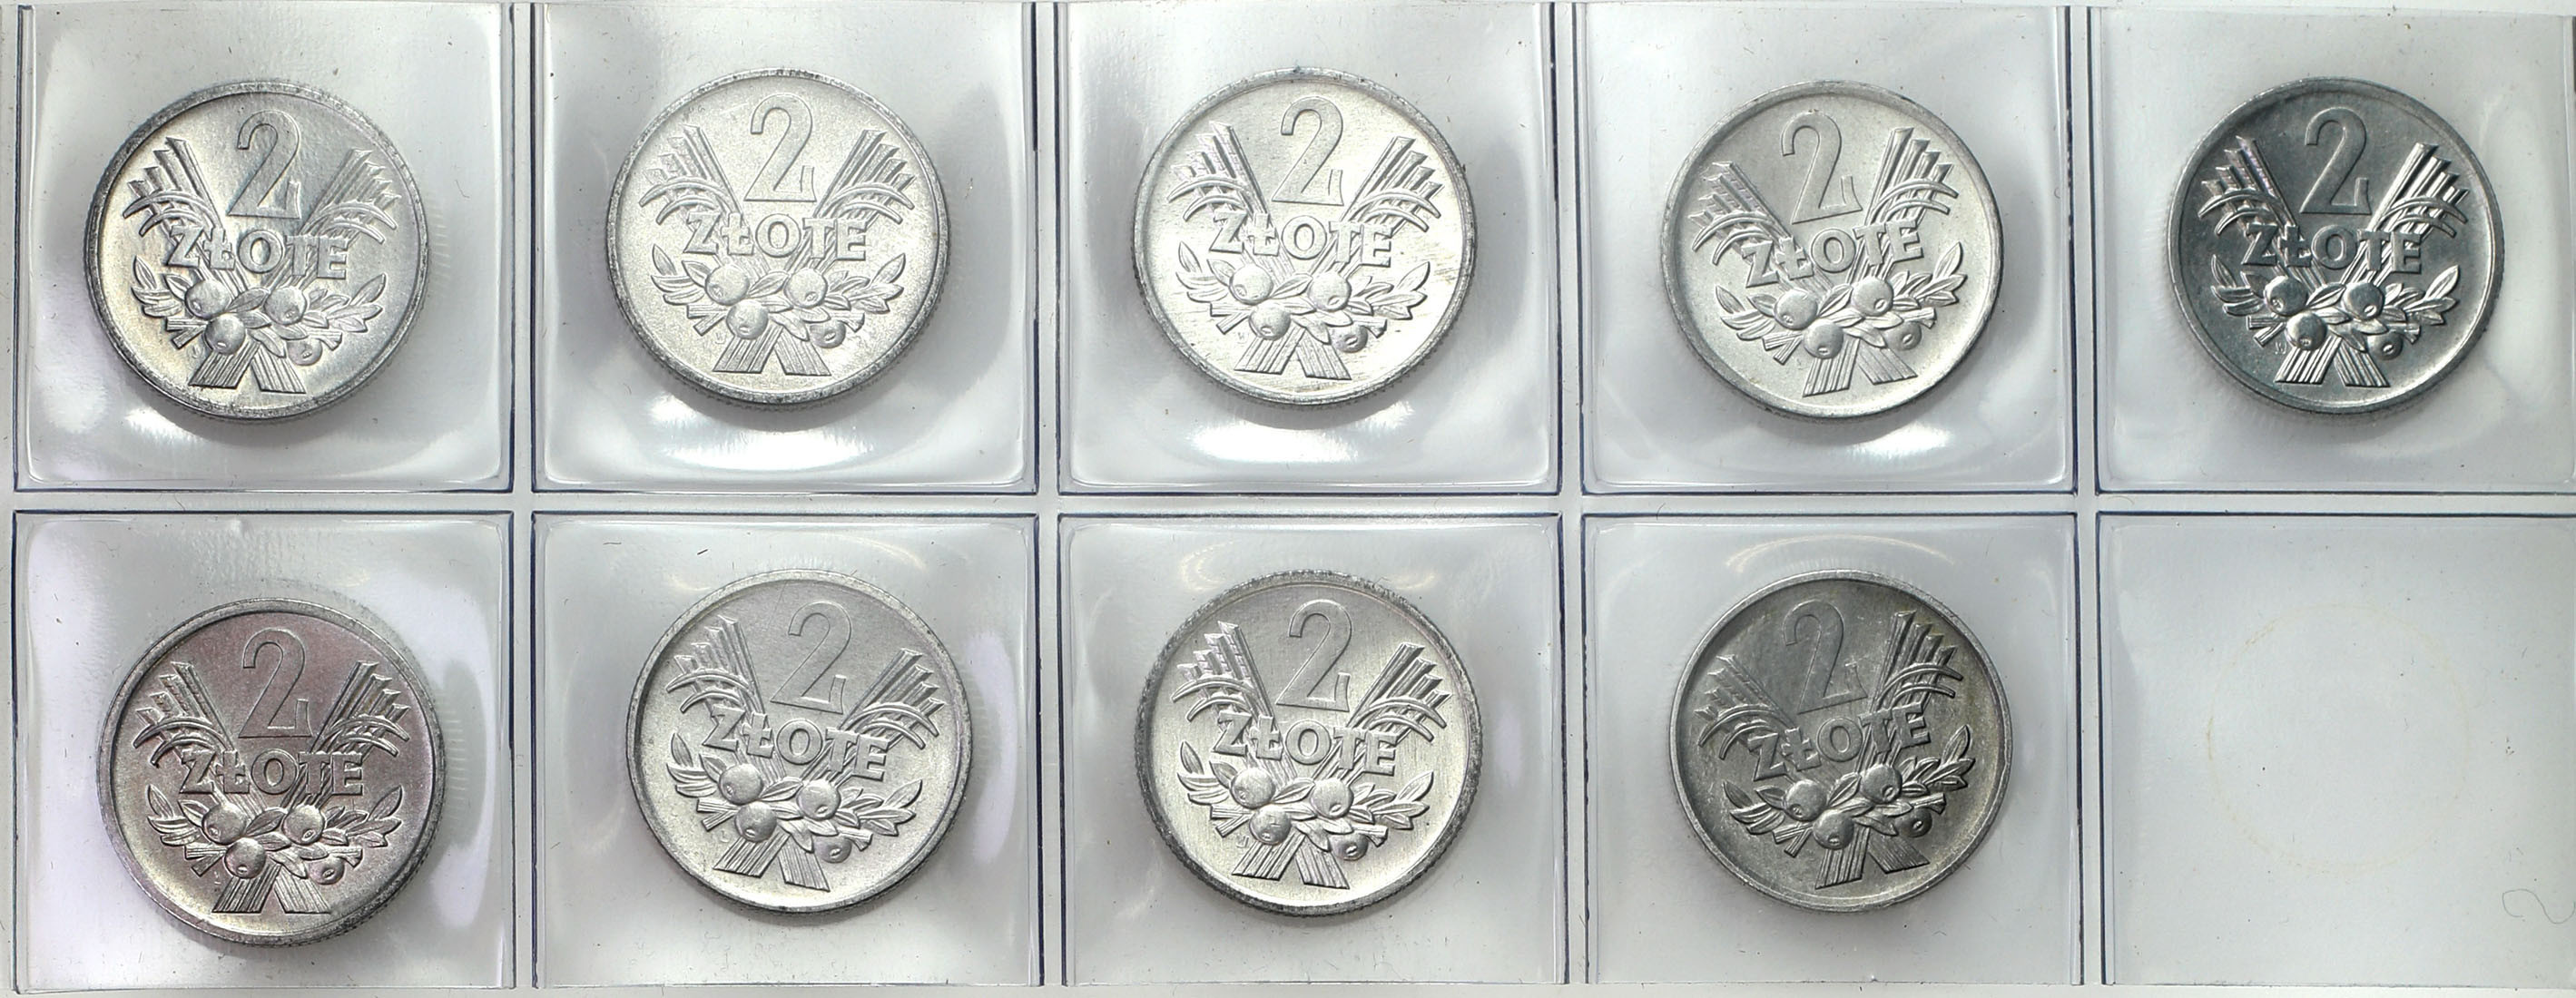 PRL. 2 złote 1959-1974 jagody, zestaw 9 monet - KOMPLET